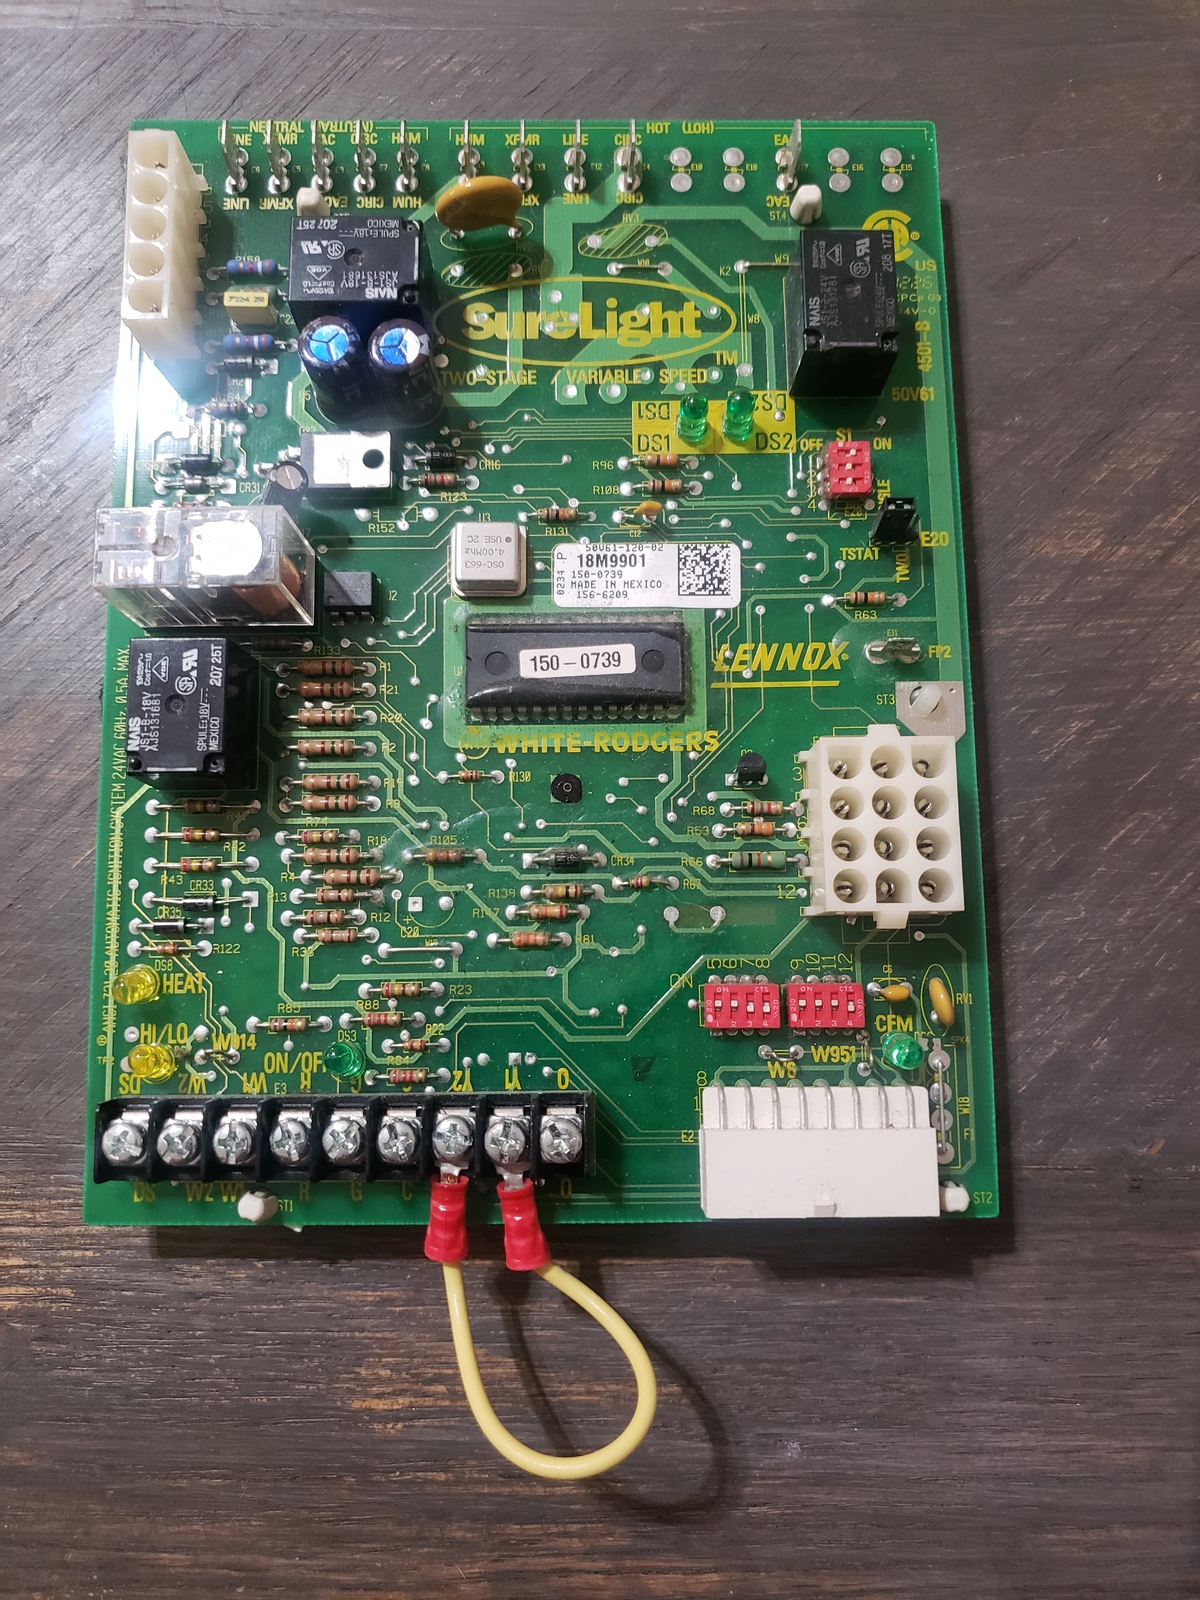 Lennox oem furnace control circuit board 18M9901 50A61-120-02 - $90.00